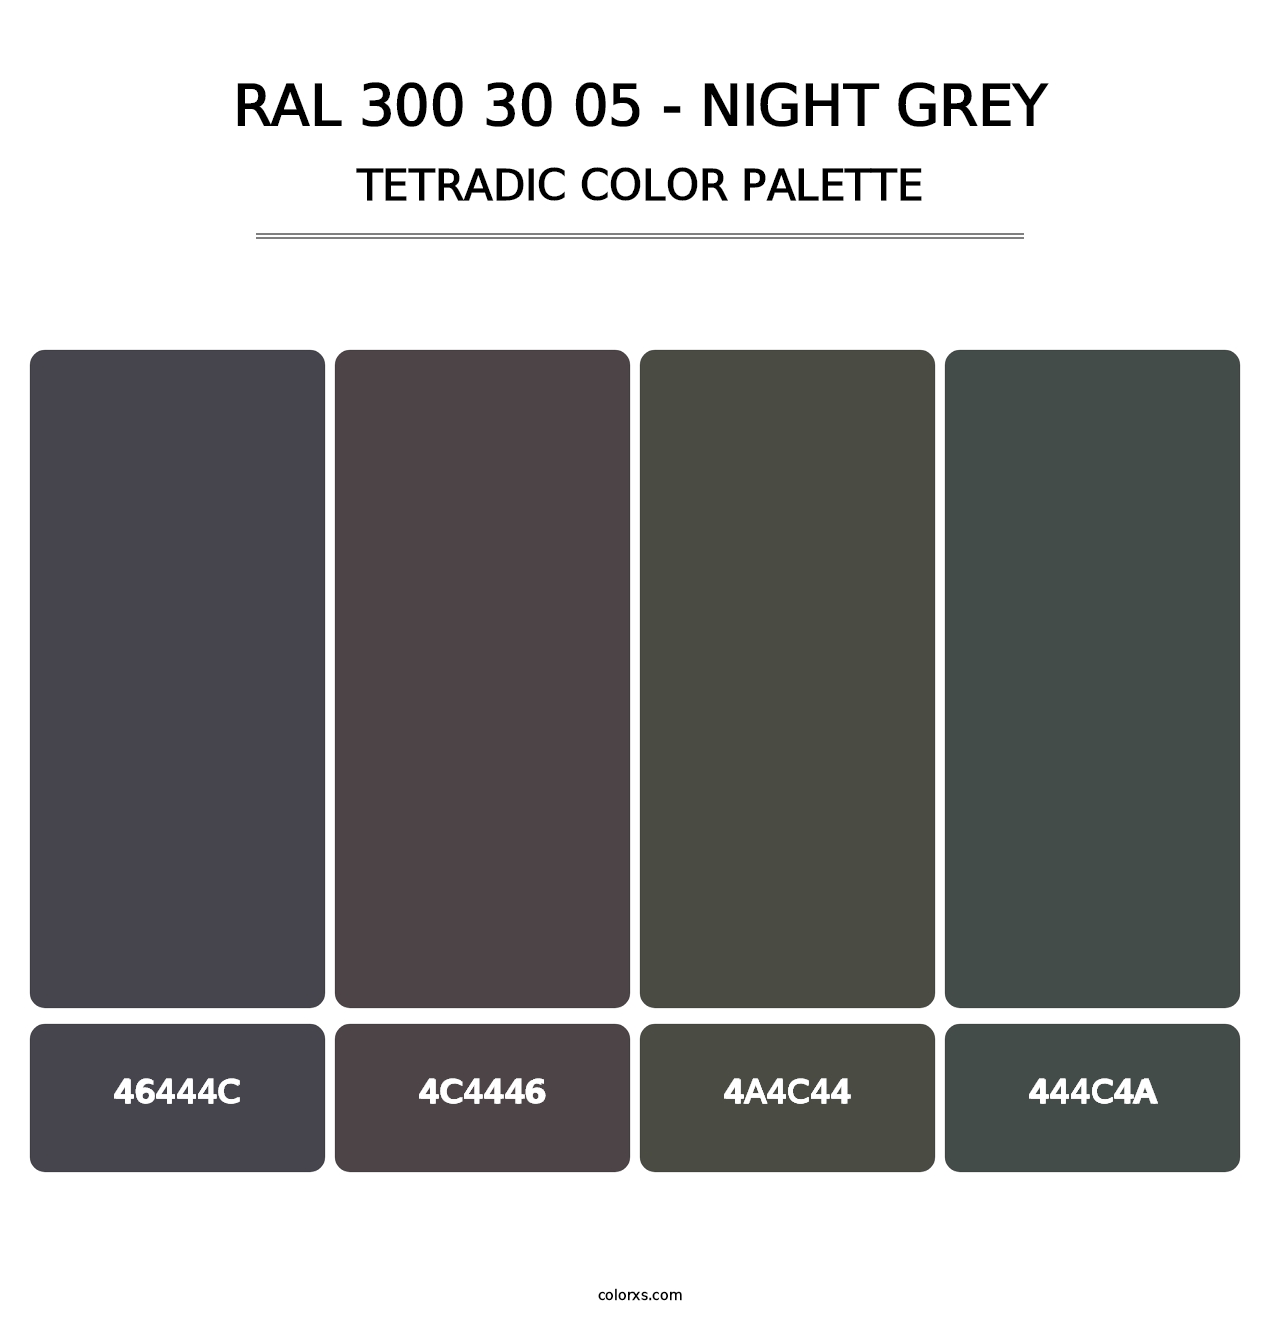 RAL 300 30 05 - Night Grey - Tetradic Color Palette